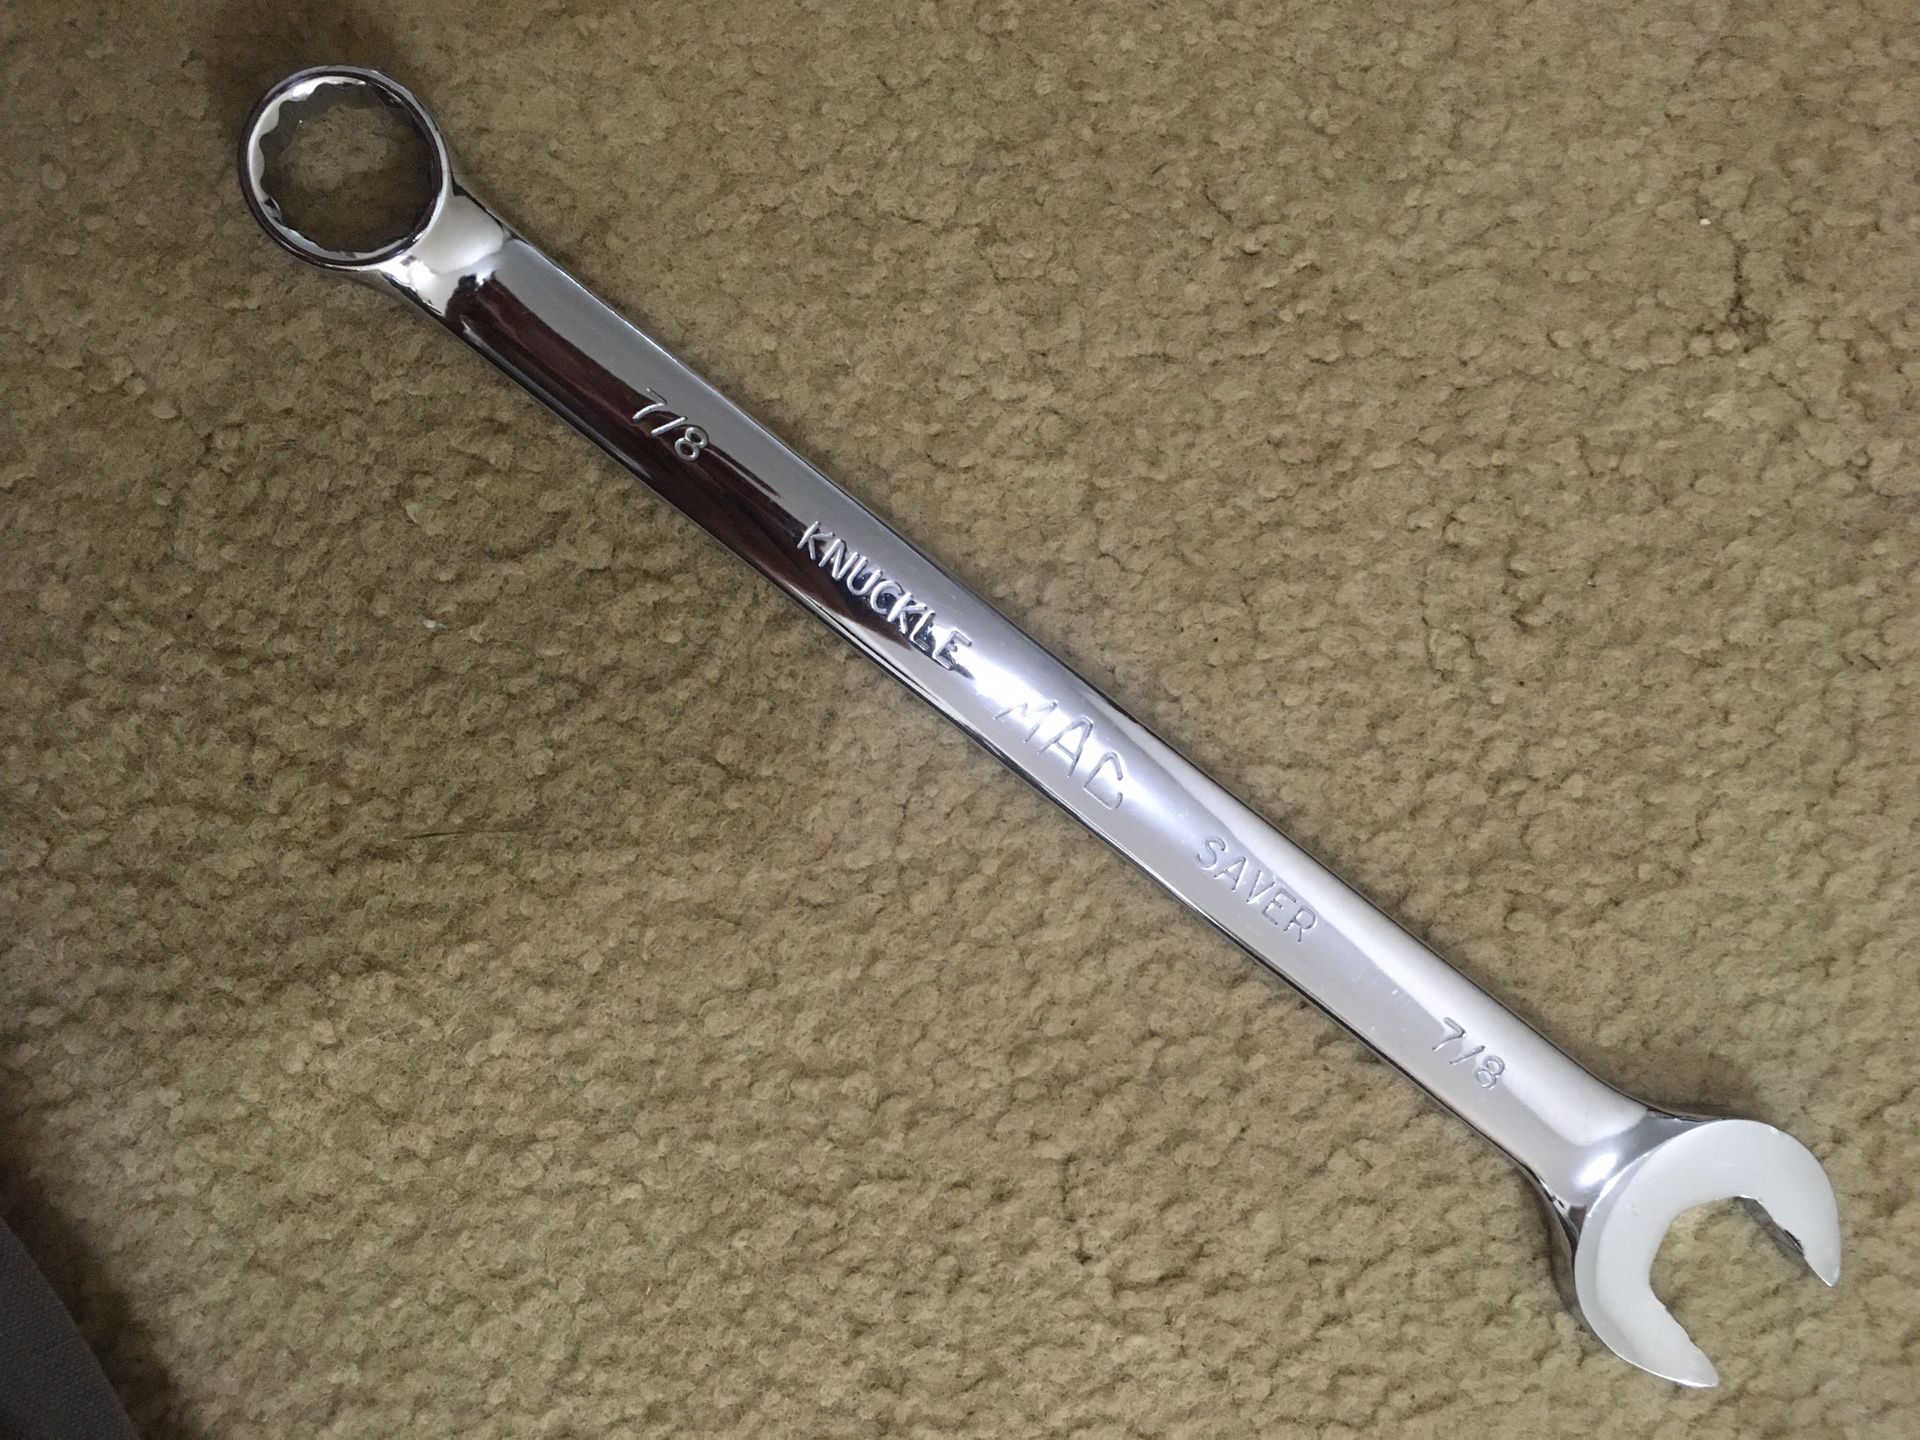 New MAC 7/8” wrench